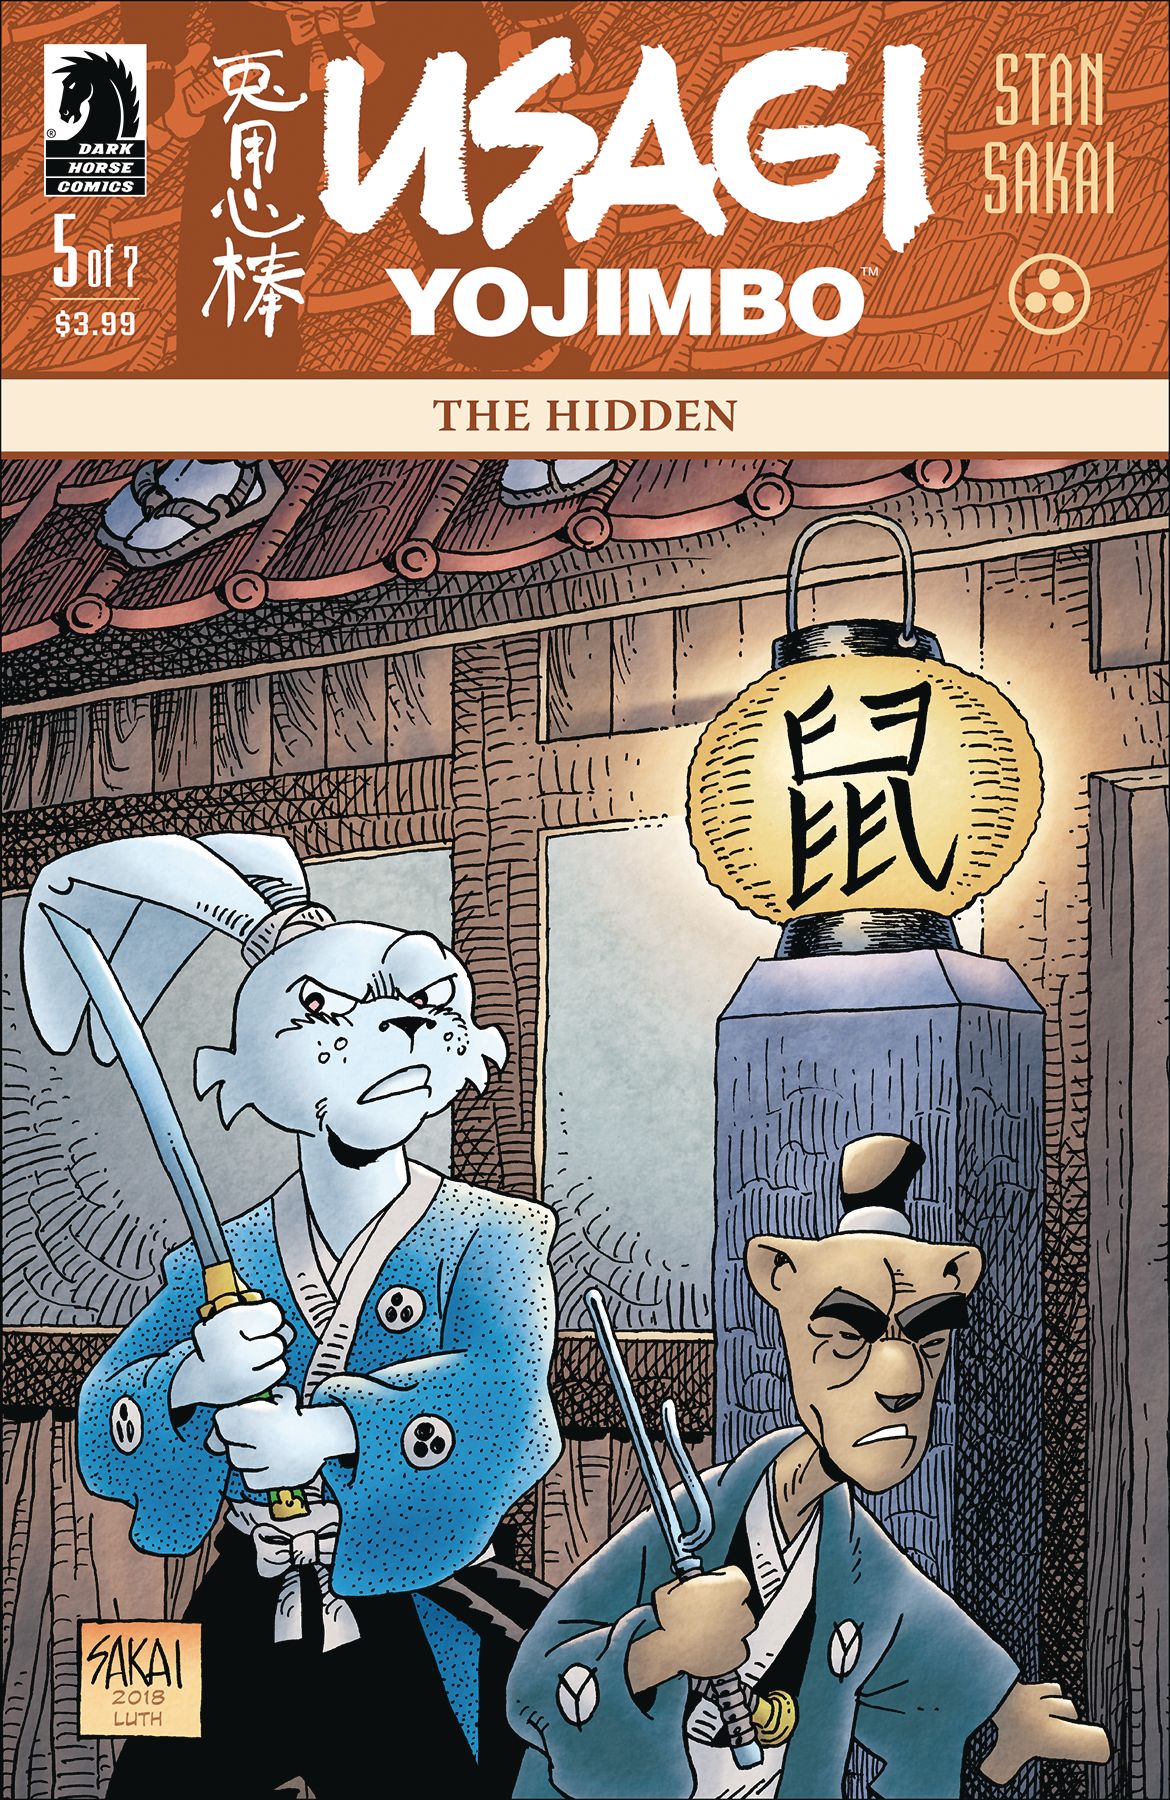 Usagi Yojimbo: The Hidden #5 Comic